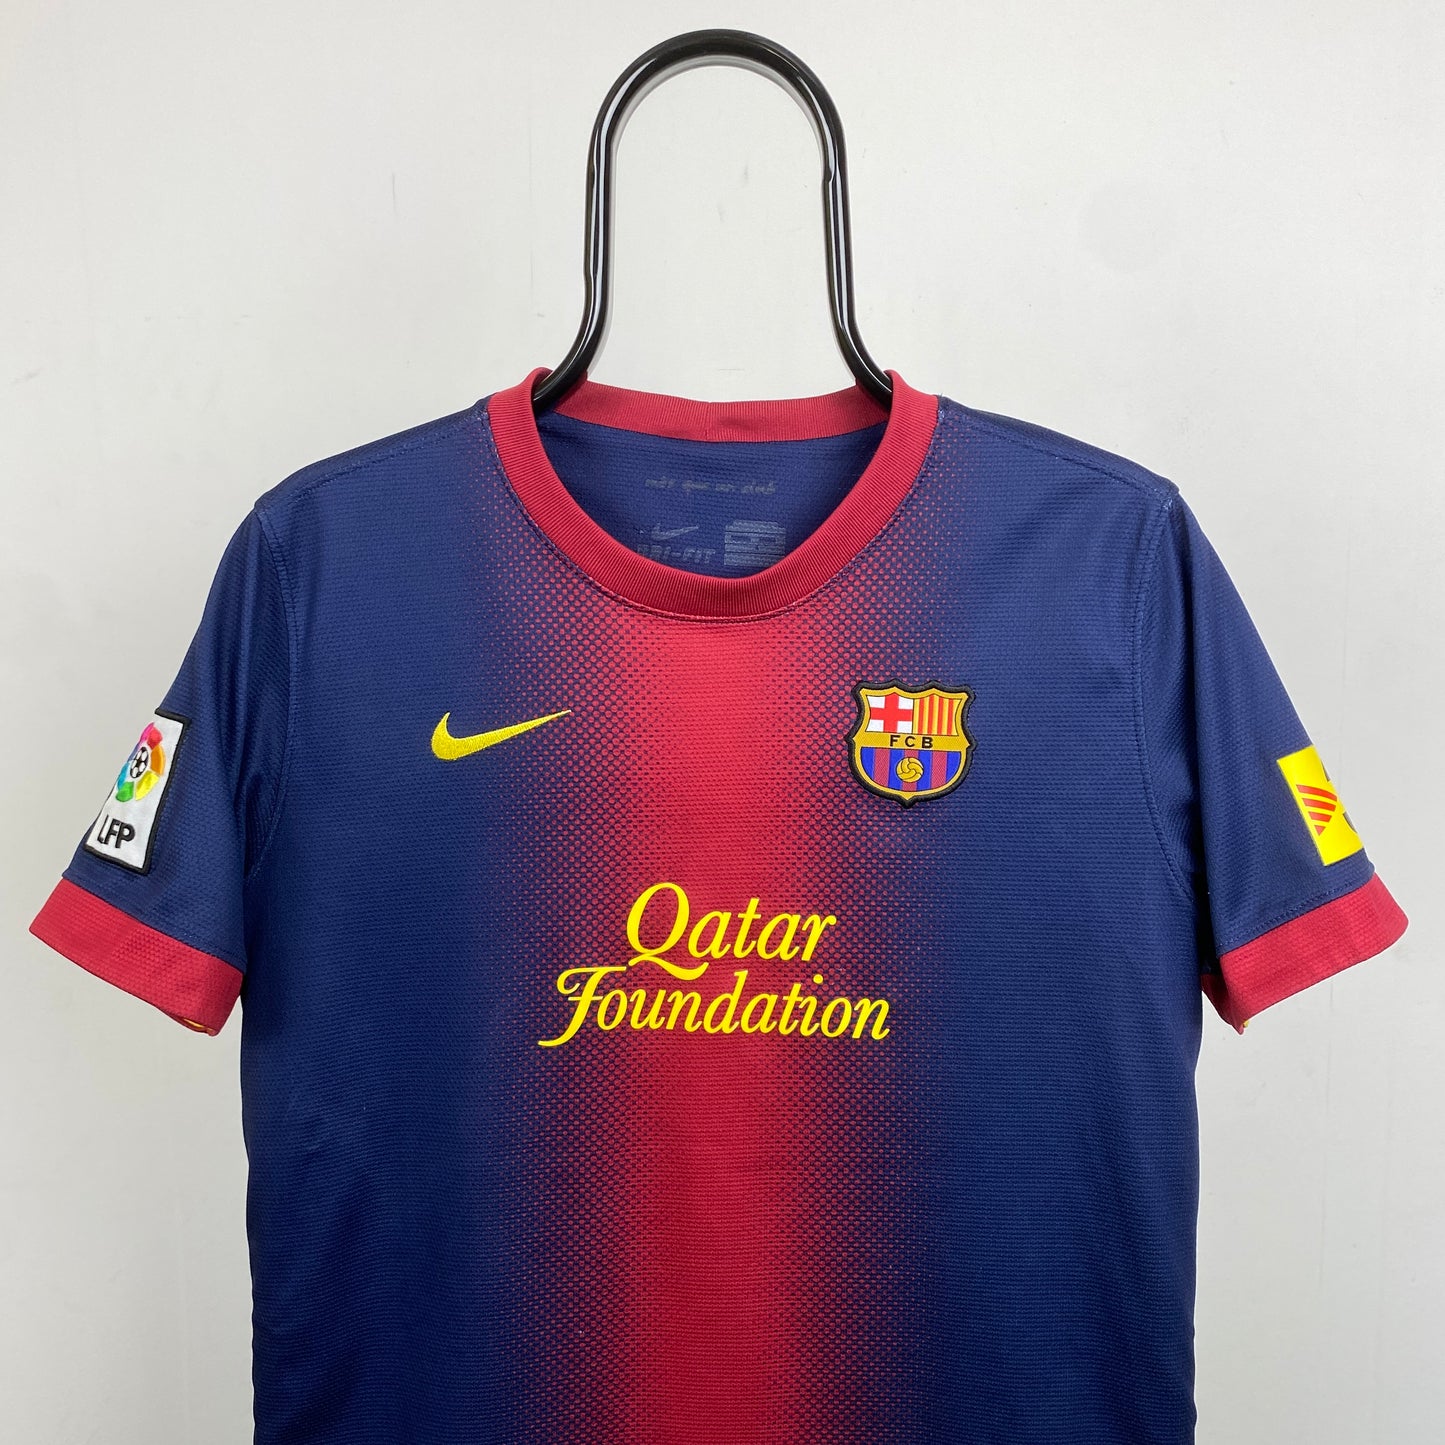 00s Nike Barcelona Football Shirt T-Shirt Red XS